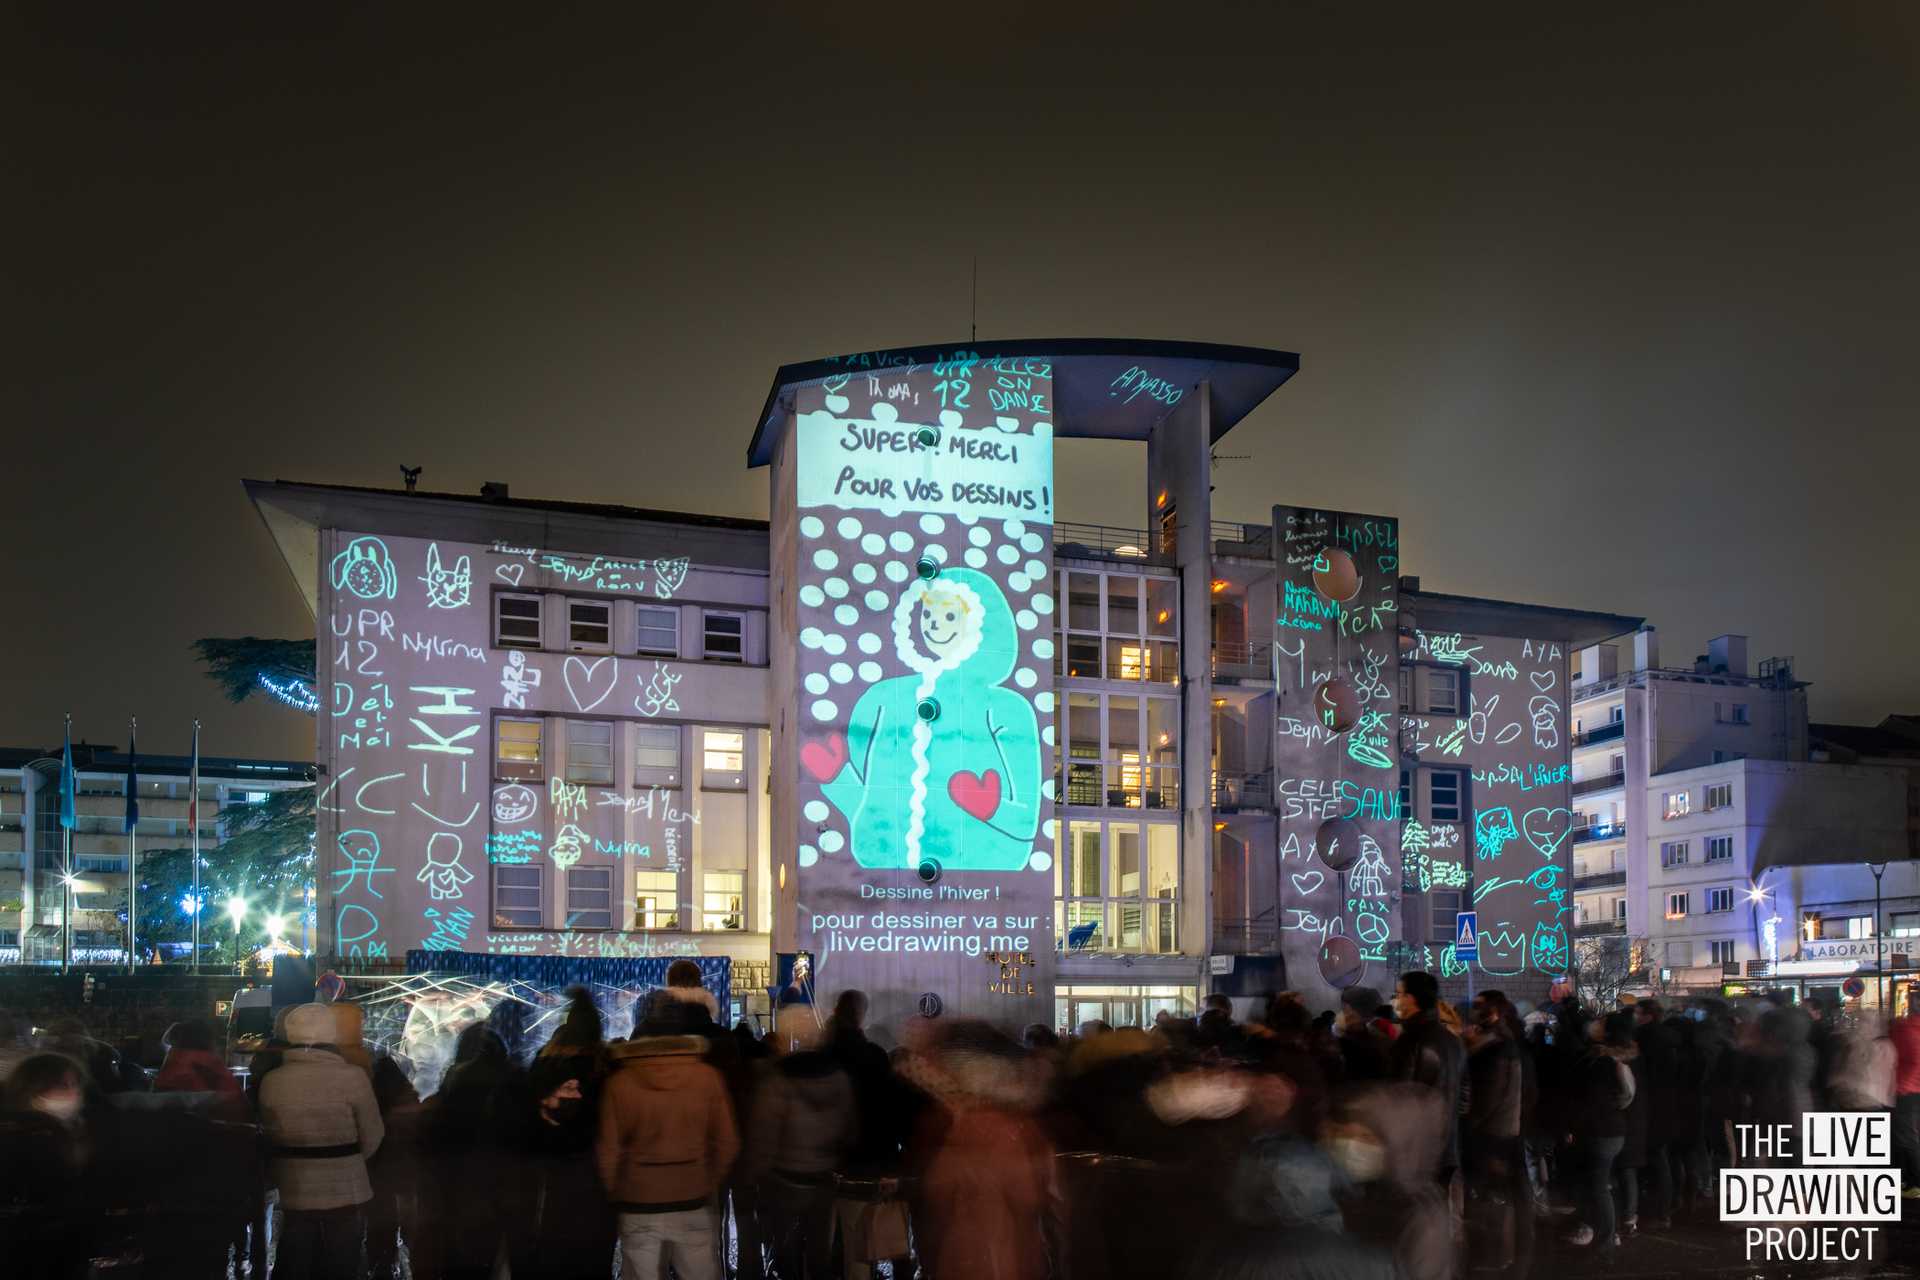 Façade projection on the Bron City Hall